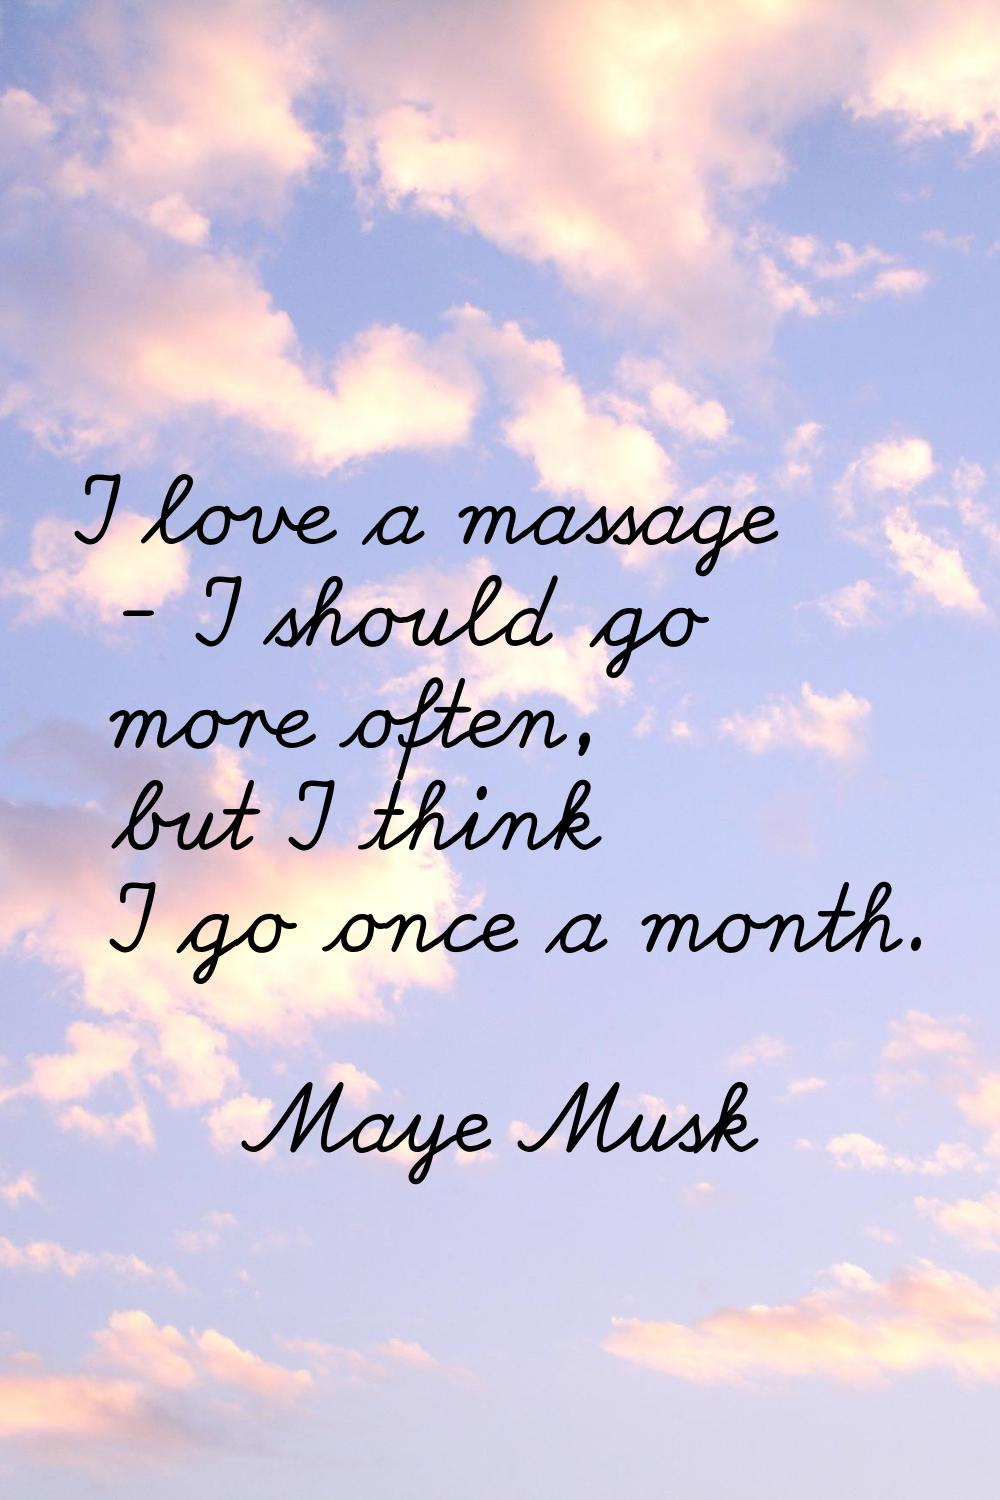 I love a massage - I should go more often, but I think I go once a month.